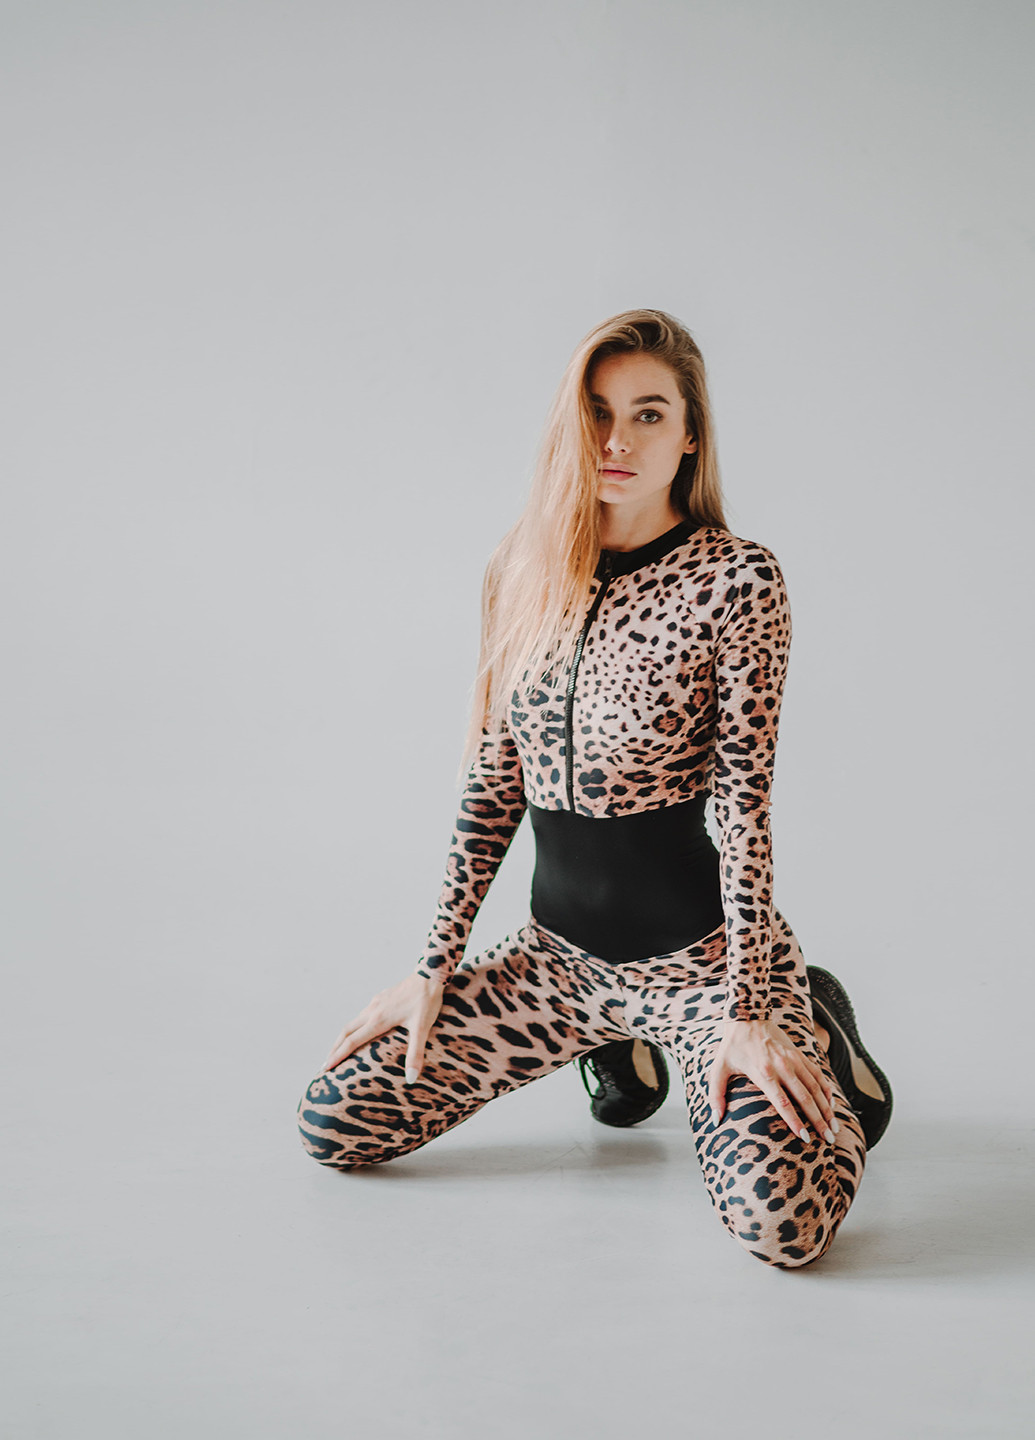 Комбинезон Asalart комбинезон-брюки леопардовый темно-бежевый спортивный полиэстер, бифлекс